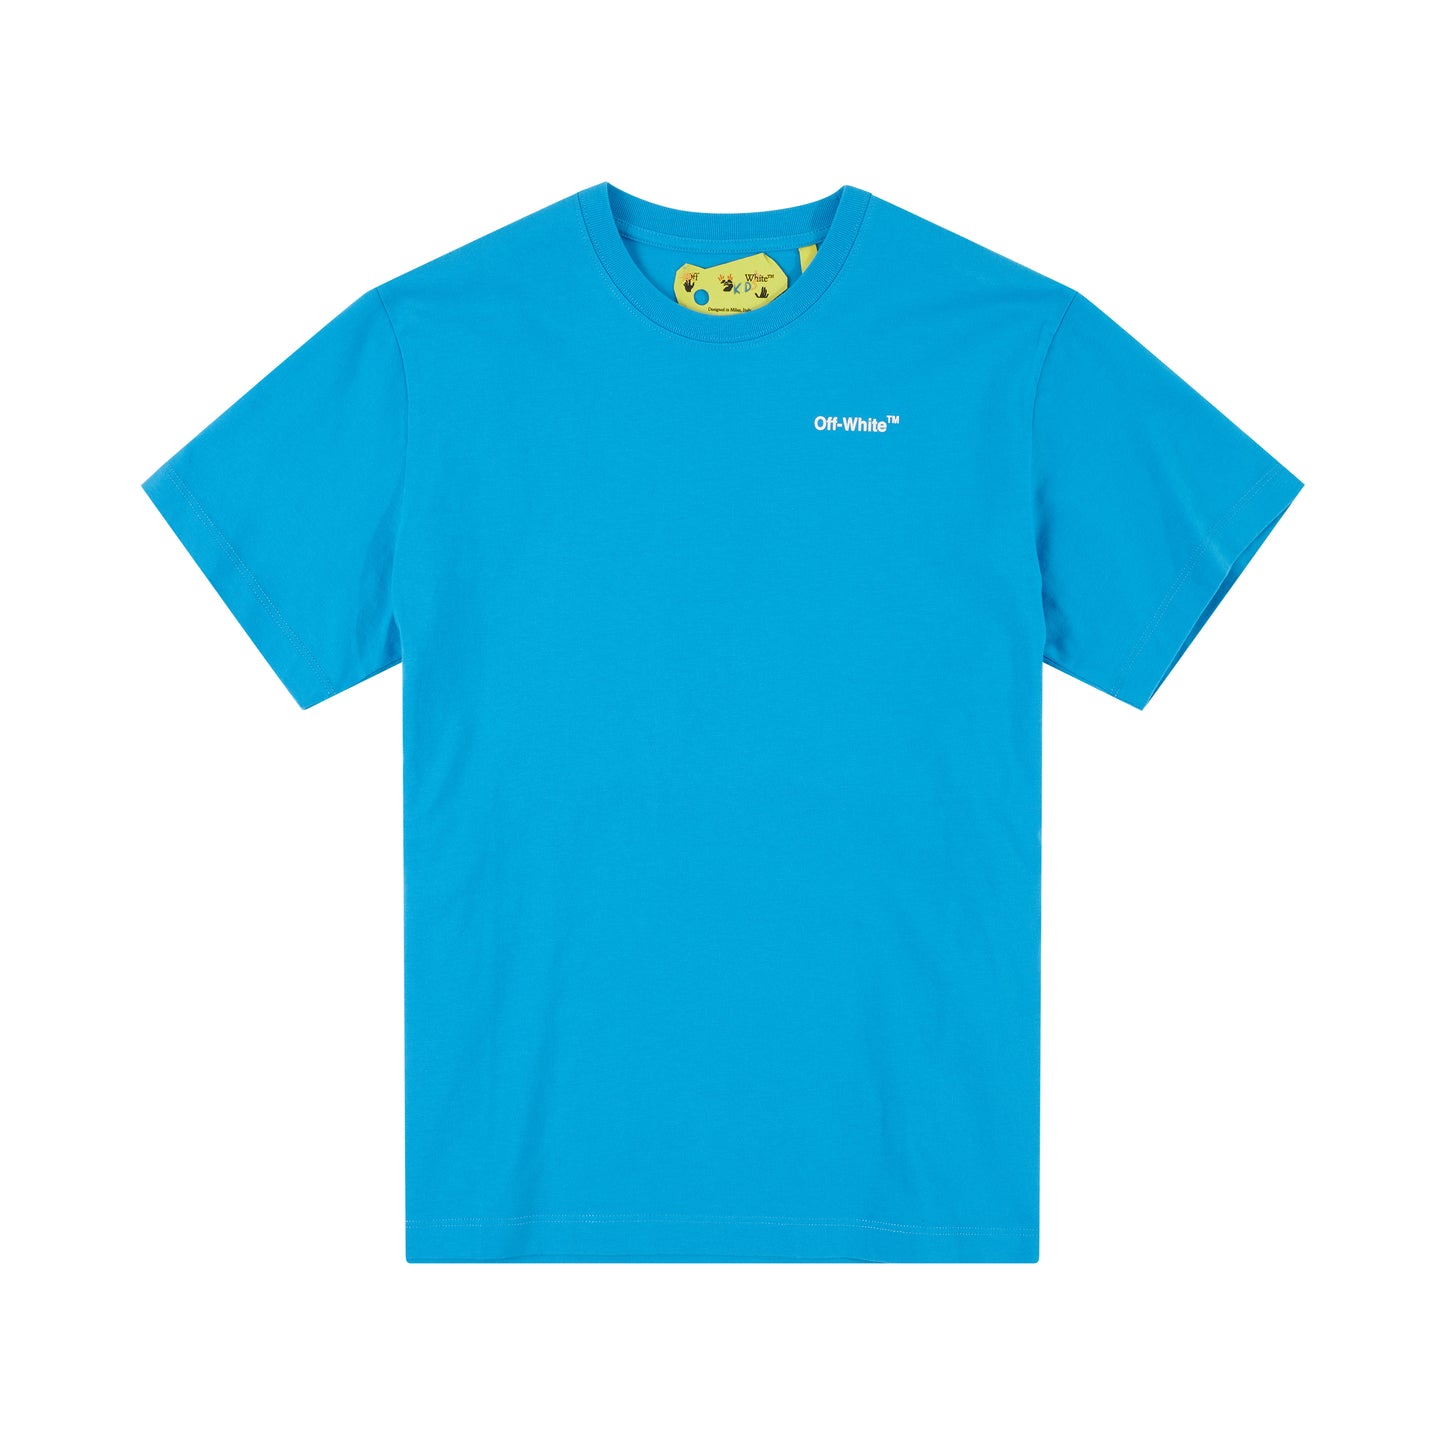 Monster Arrow Short Sleeves T-Shirt in Blue/Multicolour